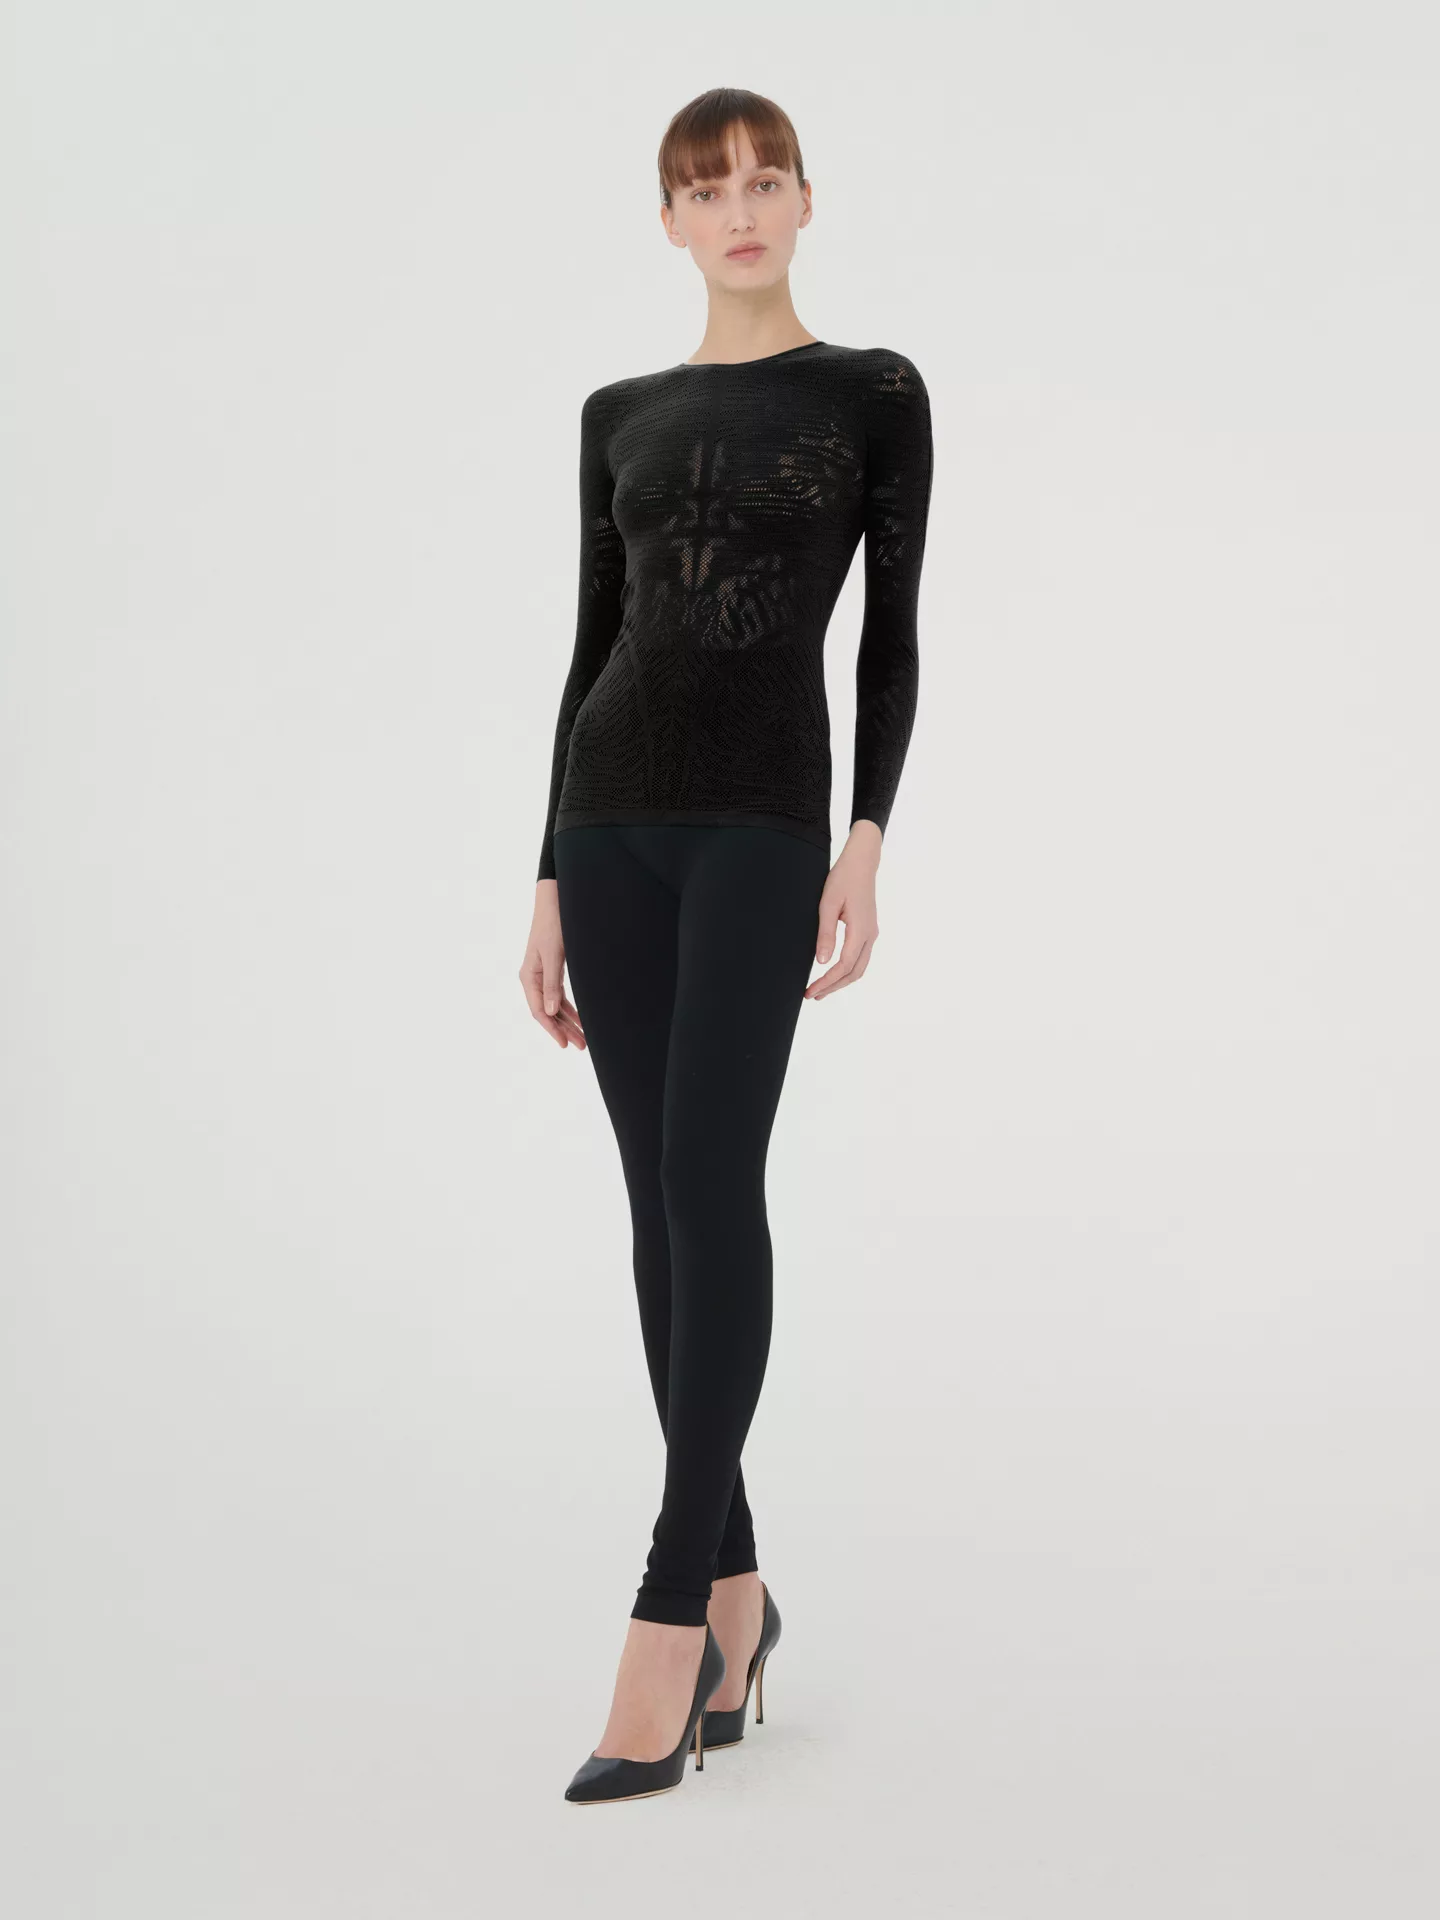 Wolford - Zebra Net Top Long Sleeves, Frau, black, Größe: S günstig online kaufen